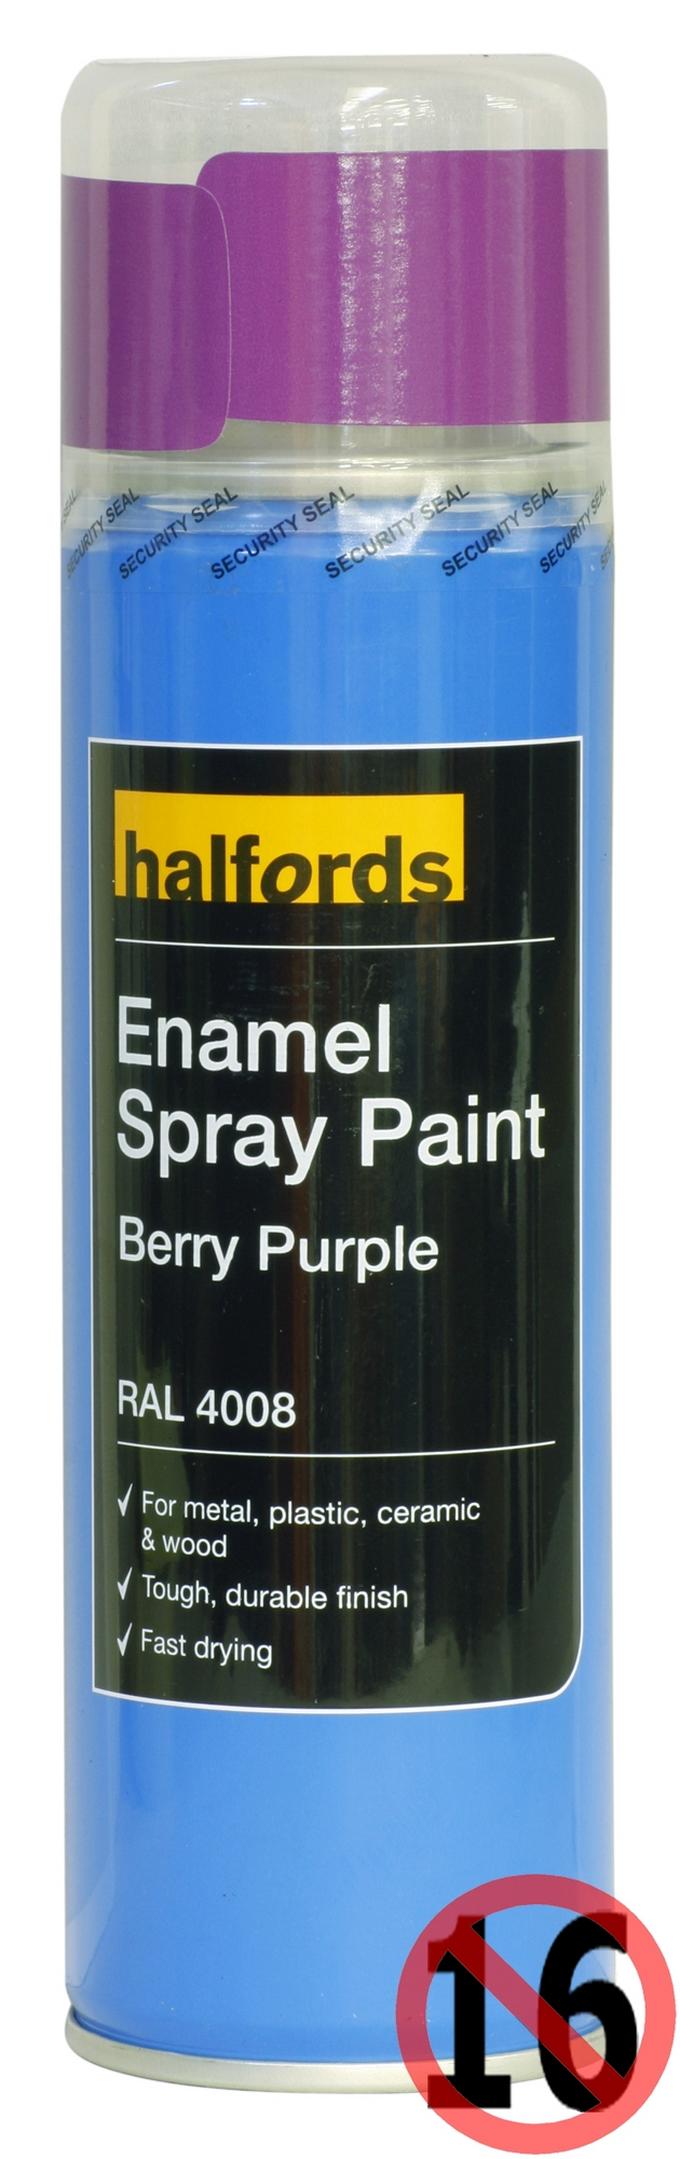 Halfords Enamel Spray Paint Berry Purple 300ml